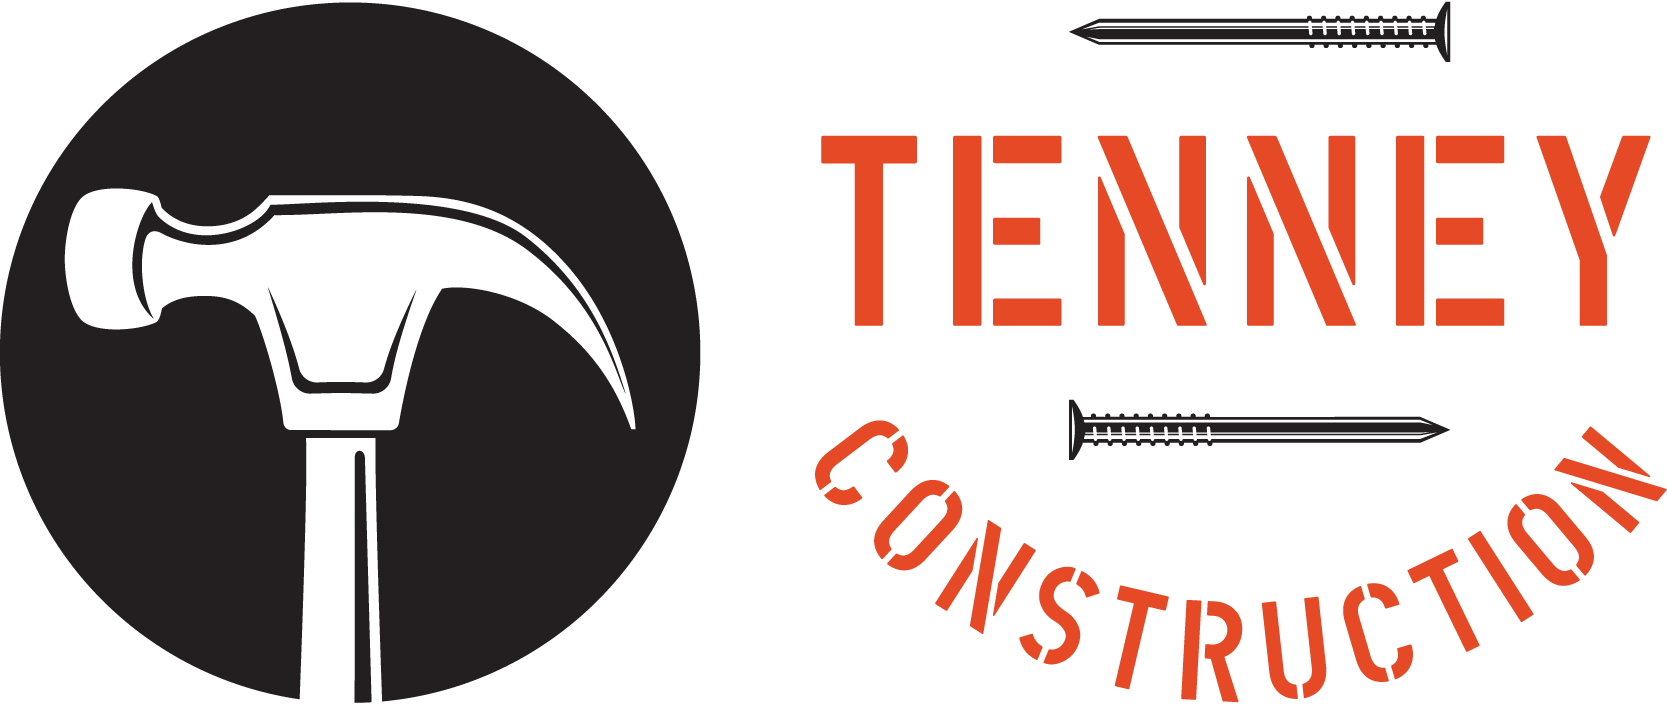 Tenney Construction Services Inc 01